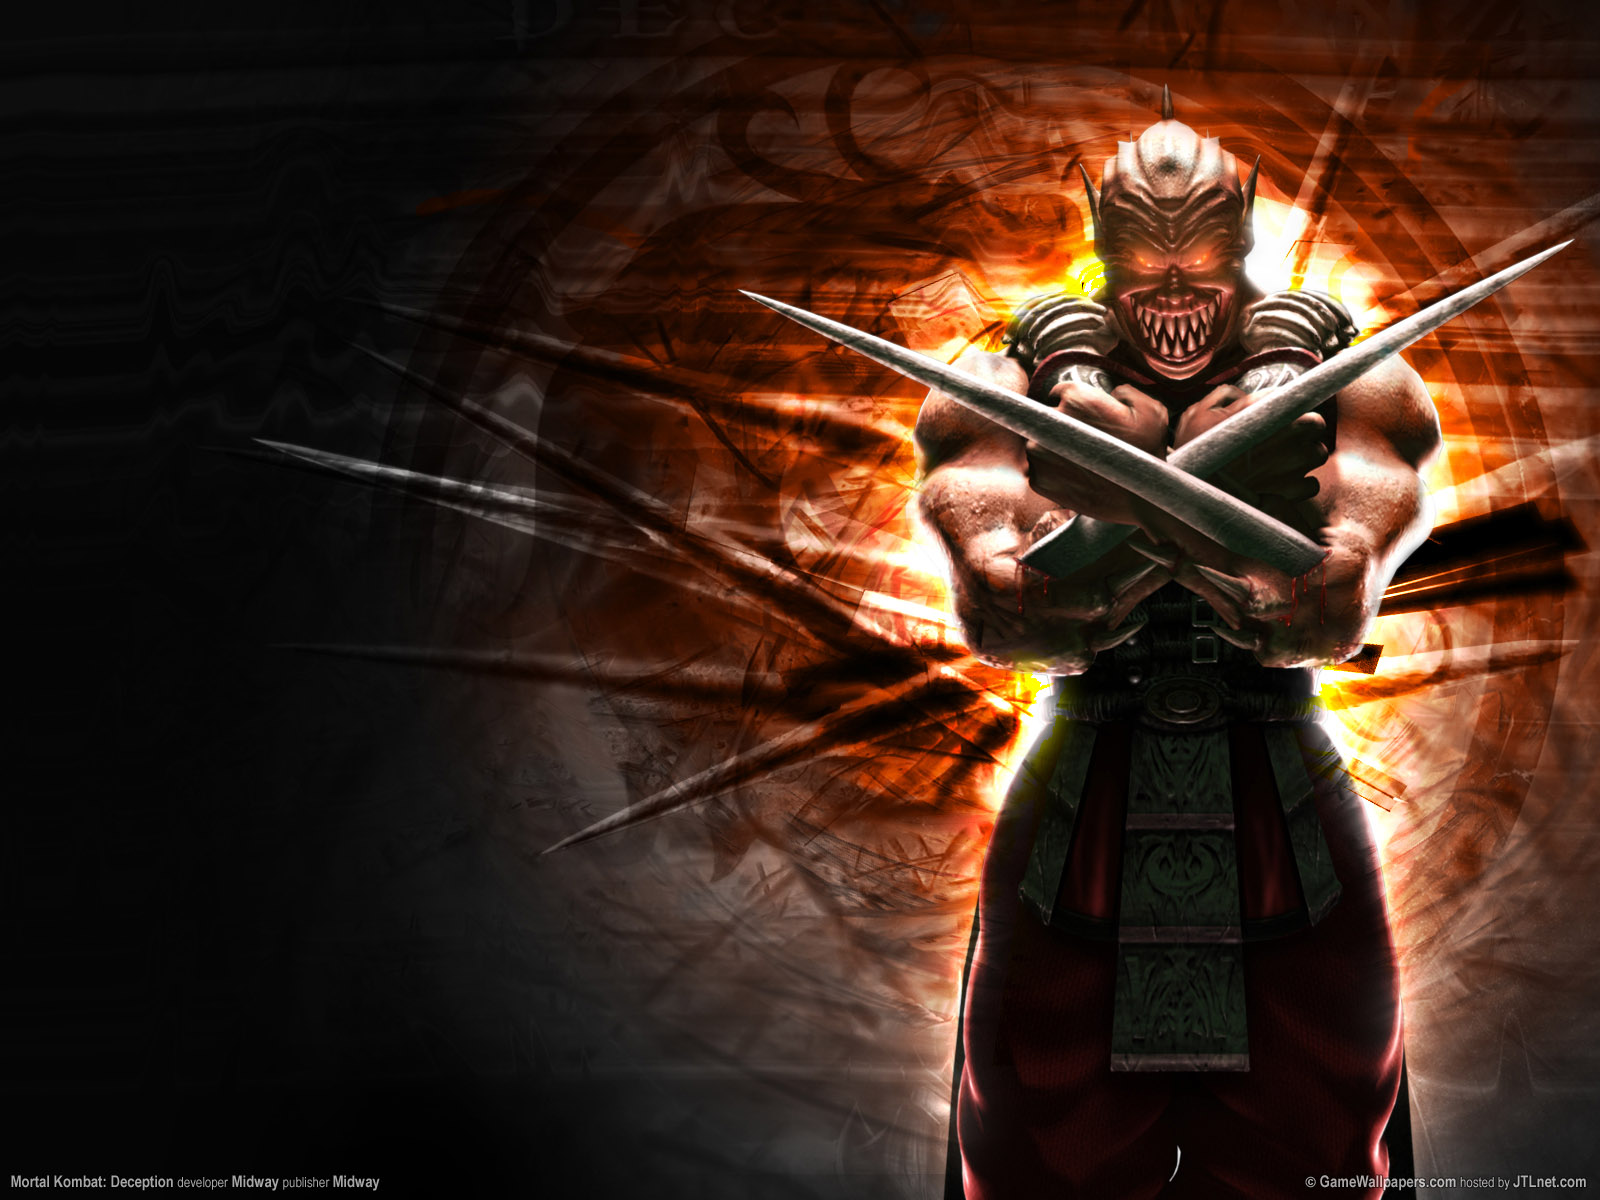 Download High quality Mortal Kombat wallpaper / Games / 1600x1200